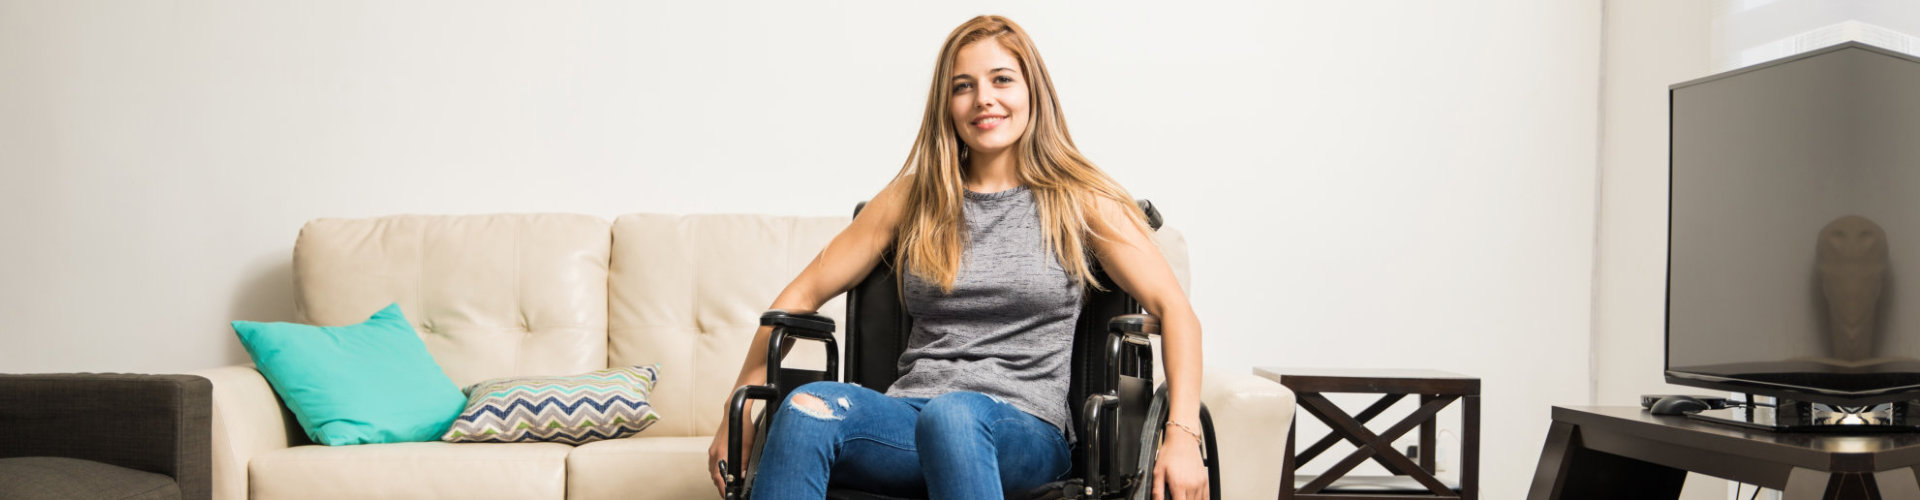 beautiful woman on a wheelchair